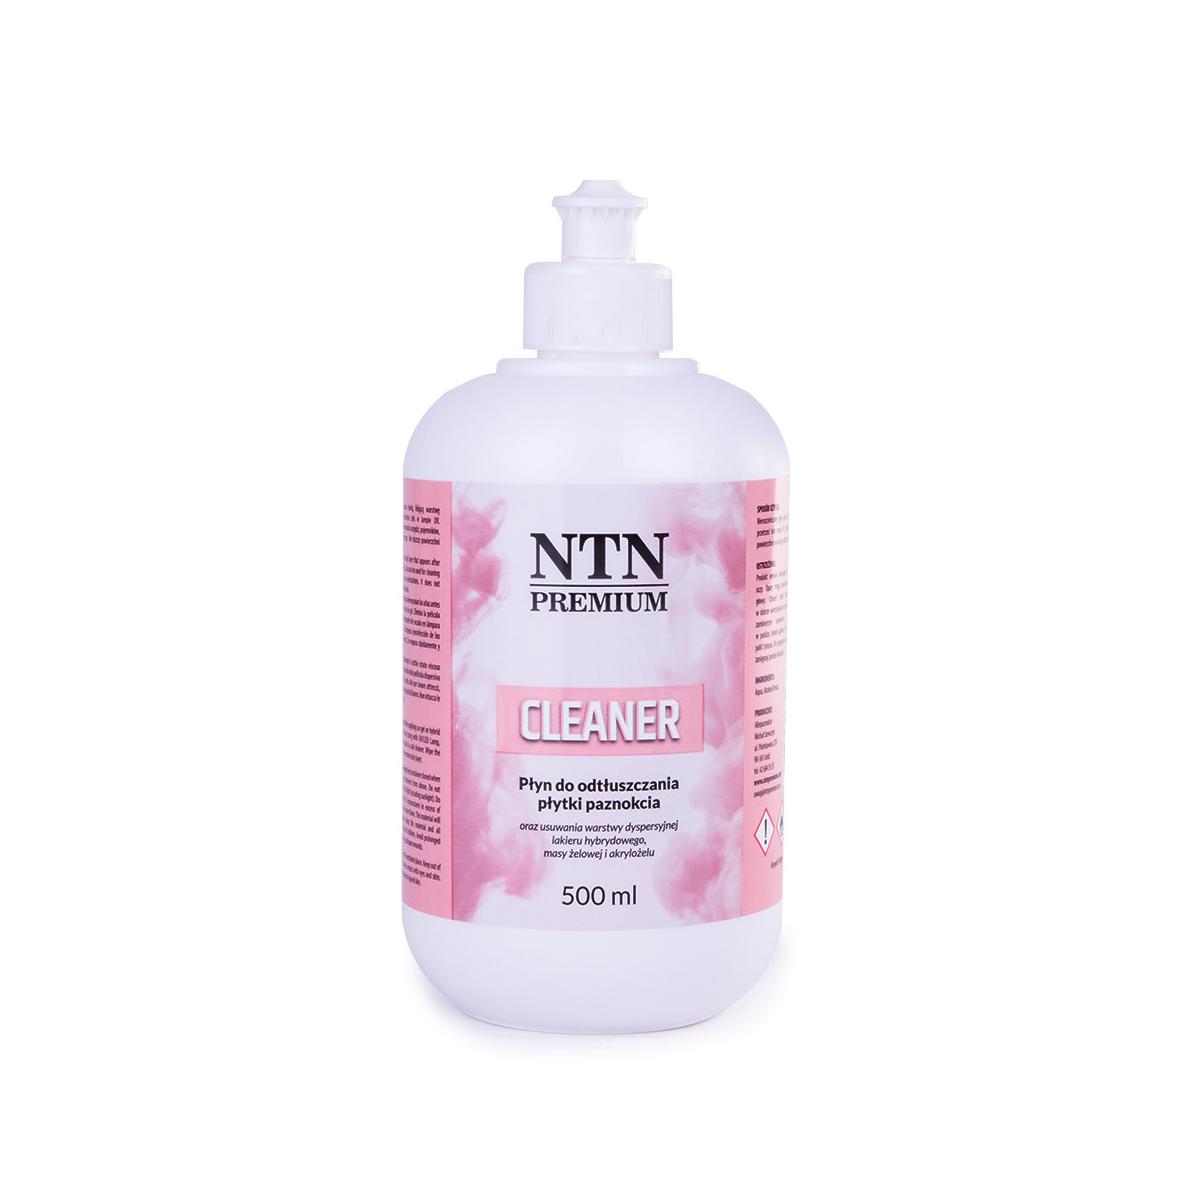 Cleaner NTN Premium